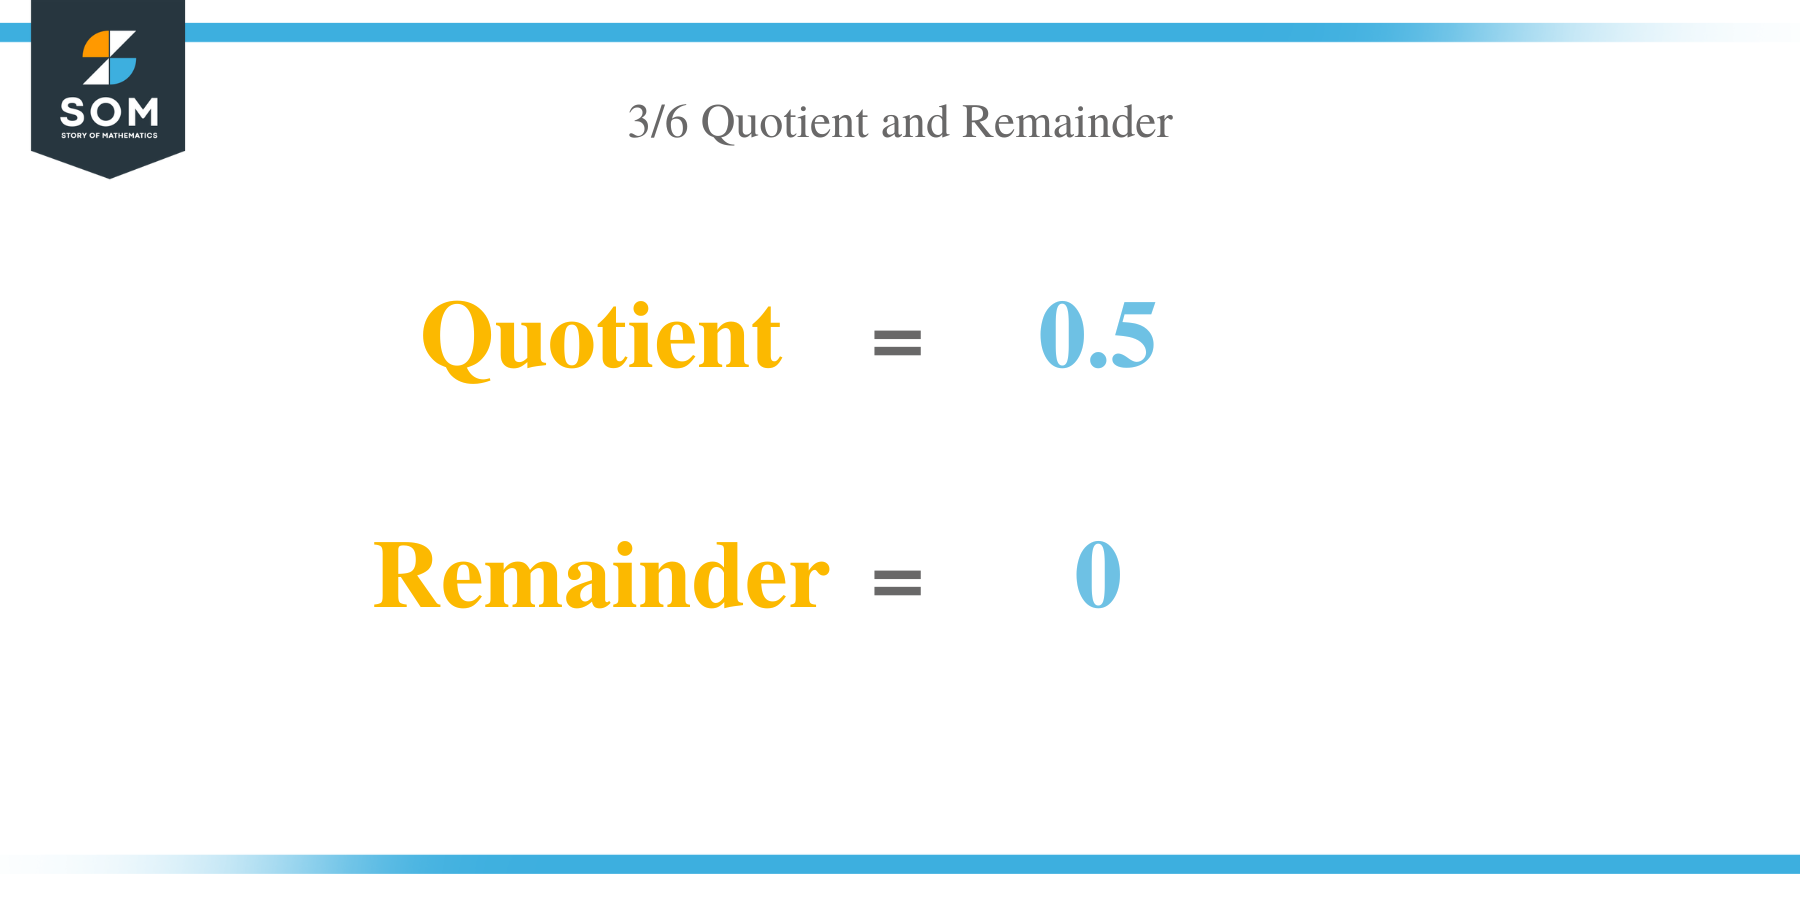 Quotient and remainder of 3 per 6